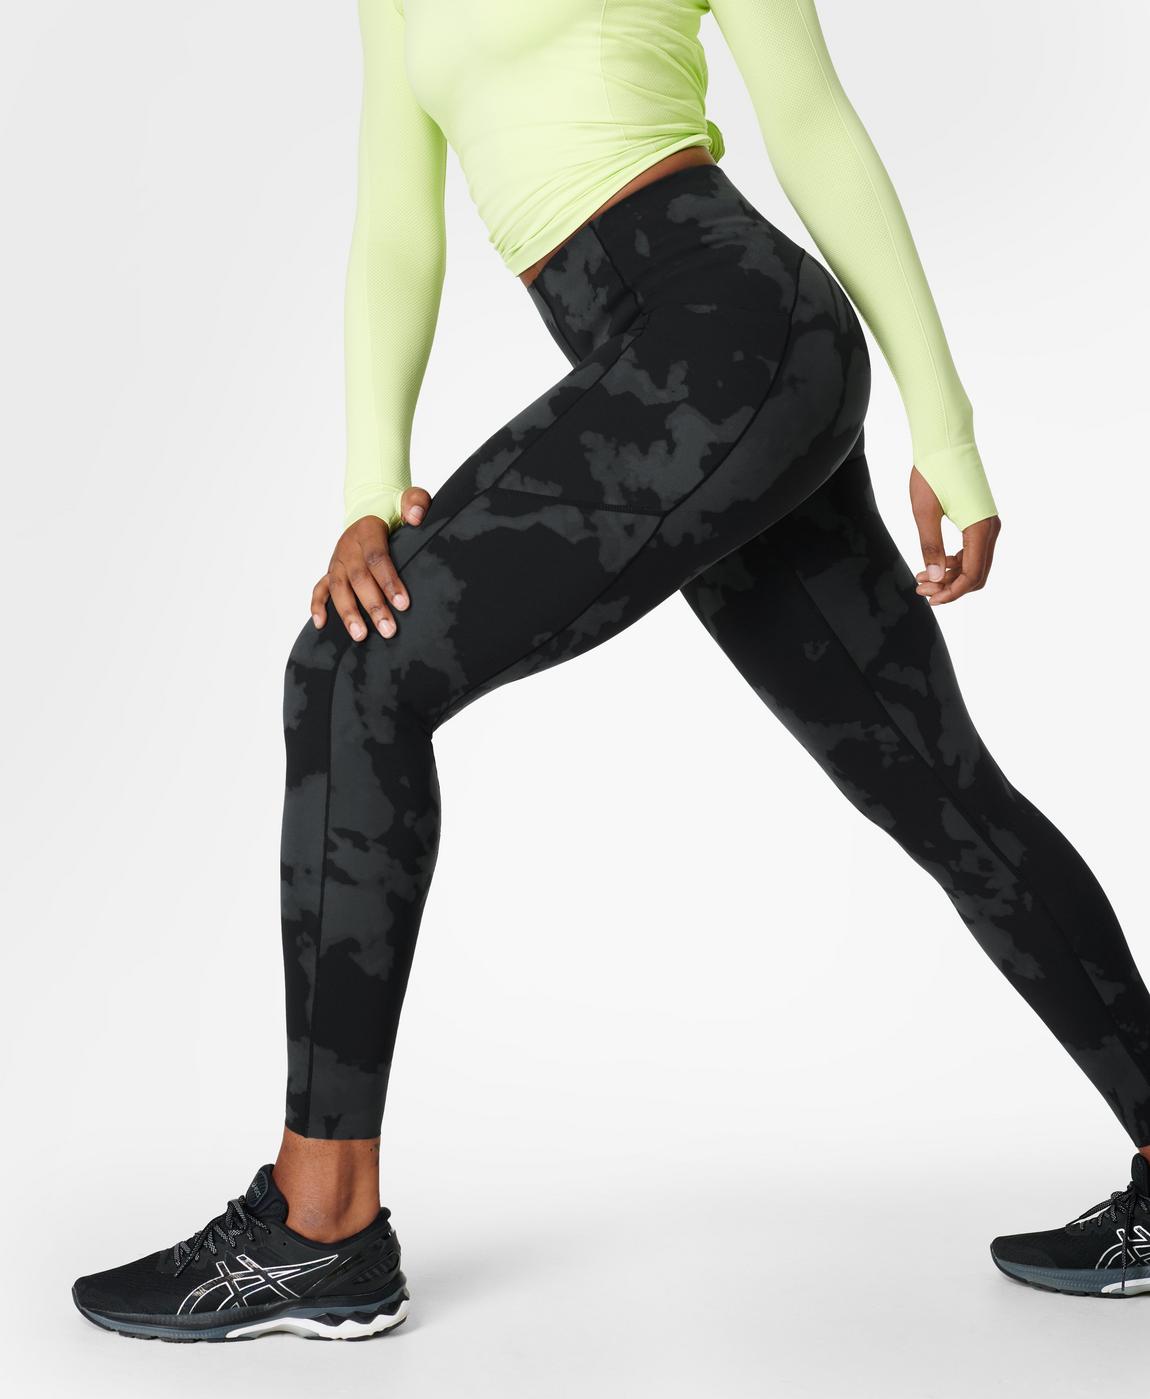 Power UltraSculpt High-Waisted Workout Leggings - Black Fade Print, Women's  Leggings